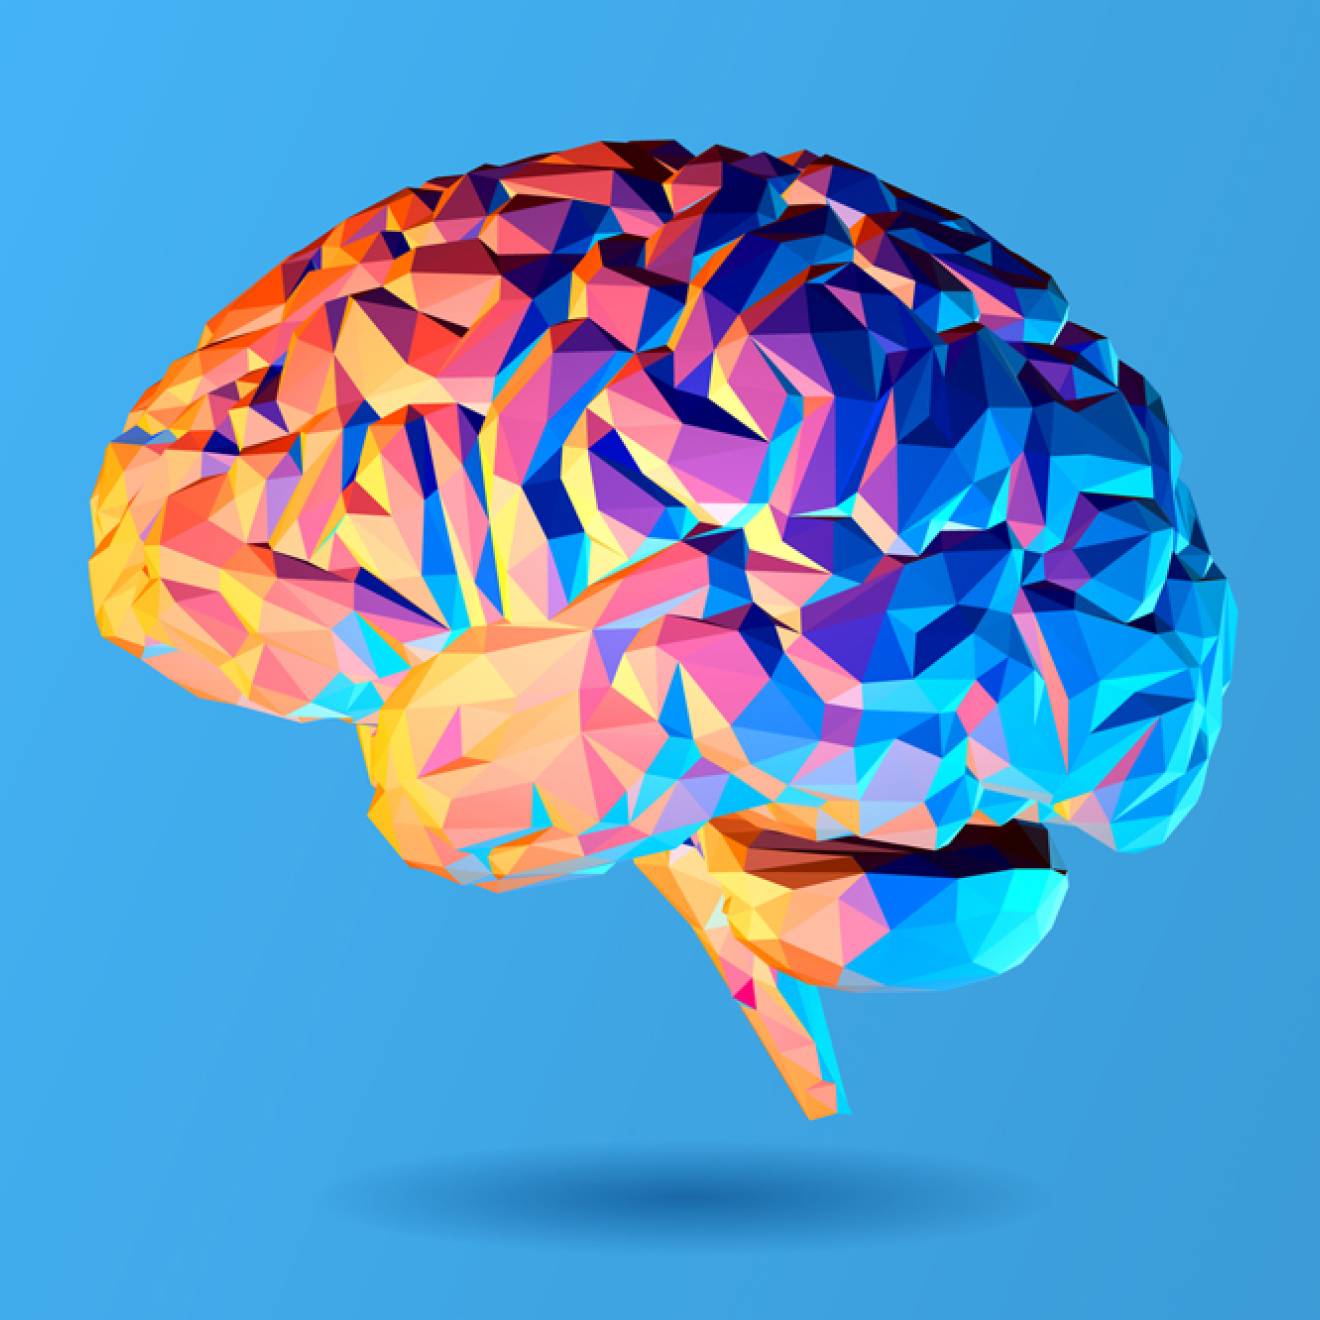 Brain illustration on blue background